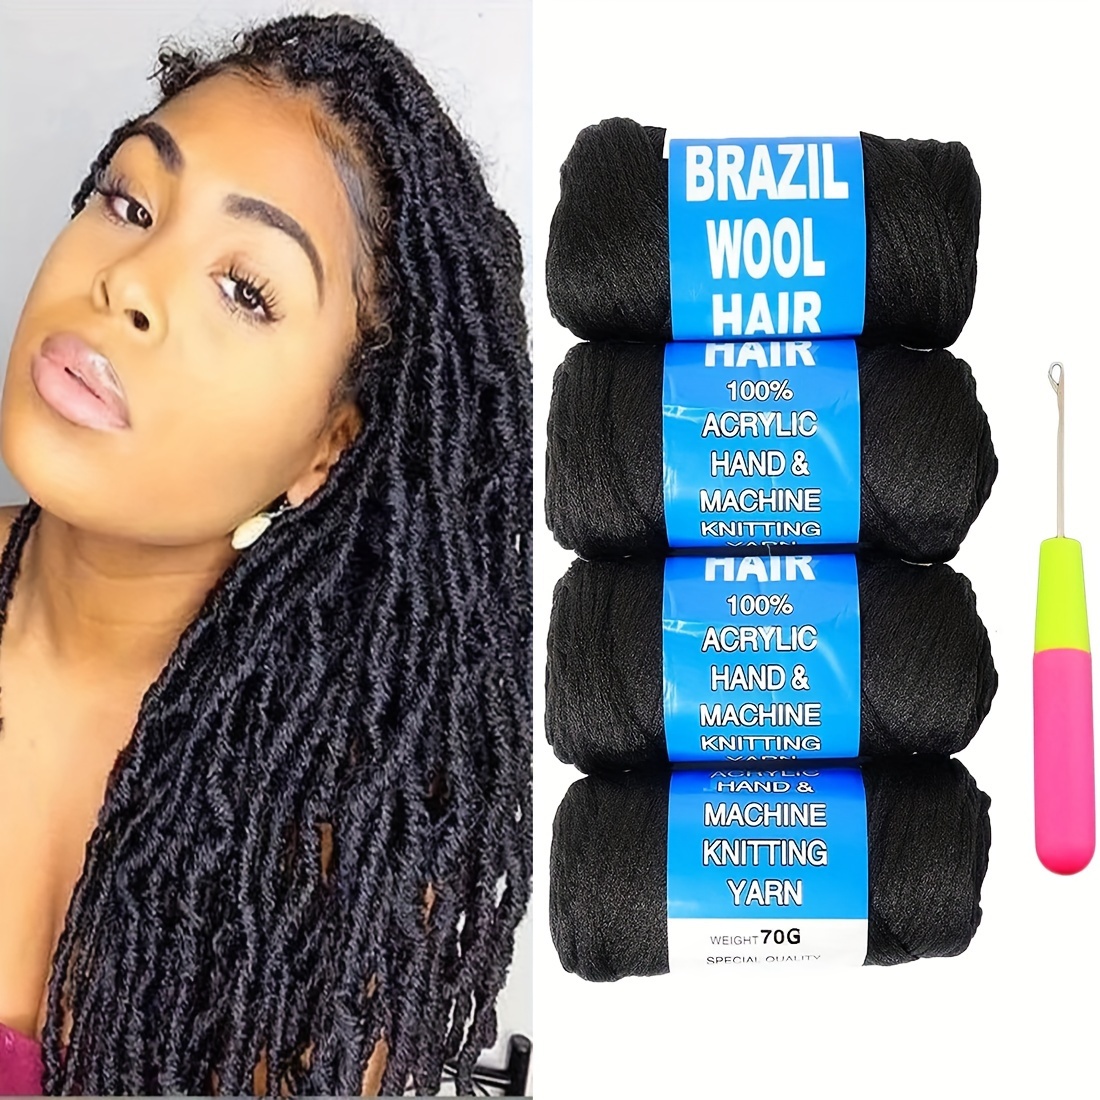 Brazilian Wool Hair 4 Roll 100% Brazilian Wool Hair for African Crochet  Hair Braiding Twisting Jumbo Braids/Senegalese Twist/Faux Locs/Wraps with